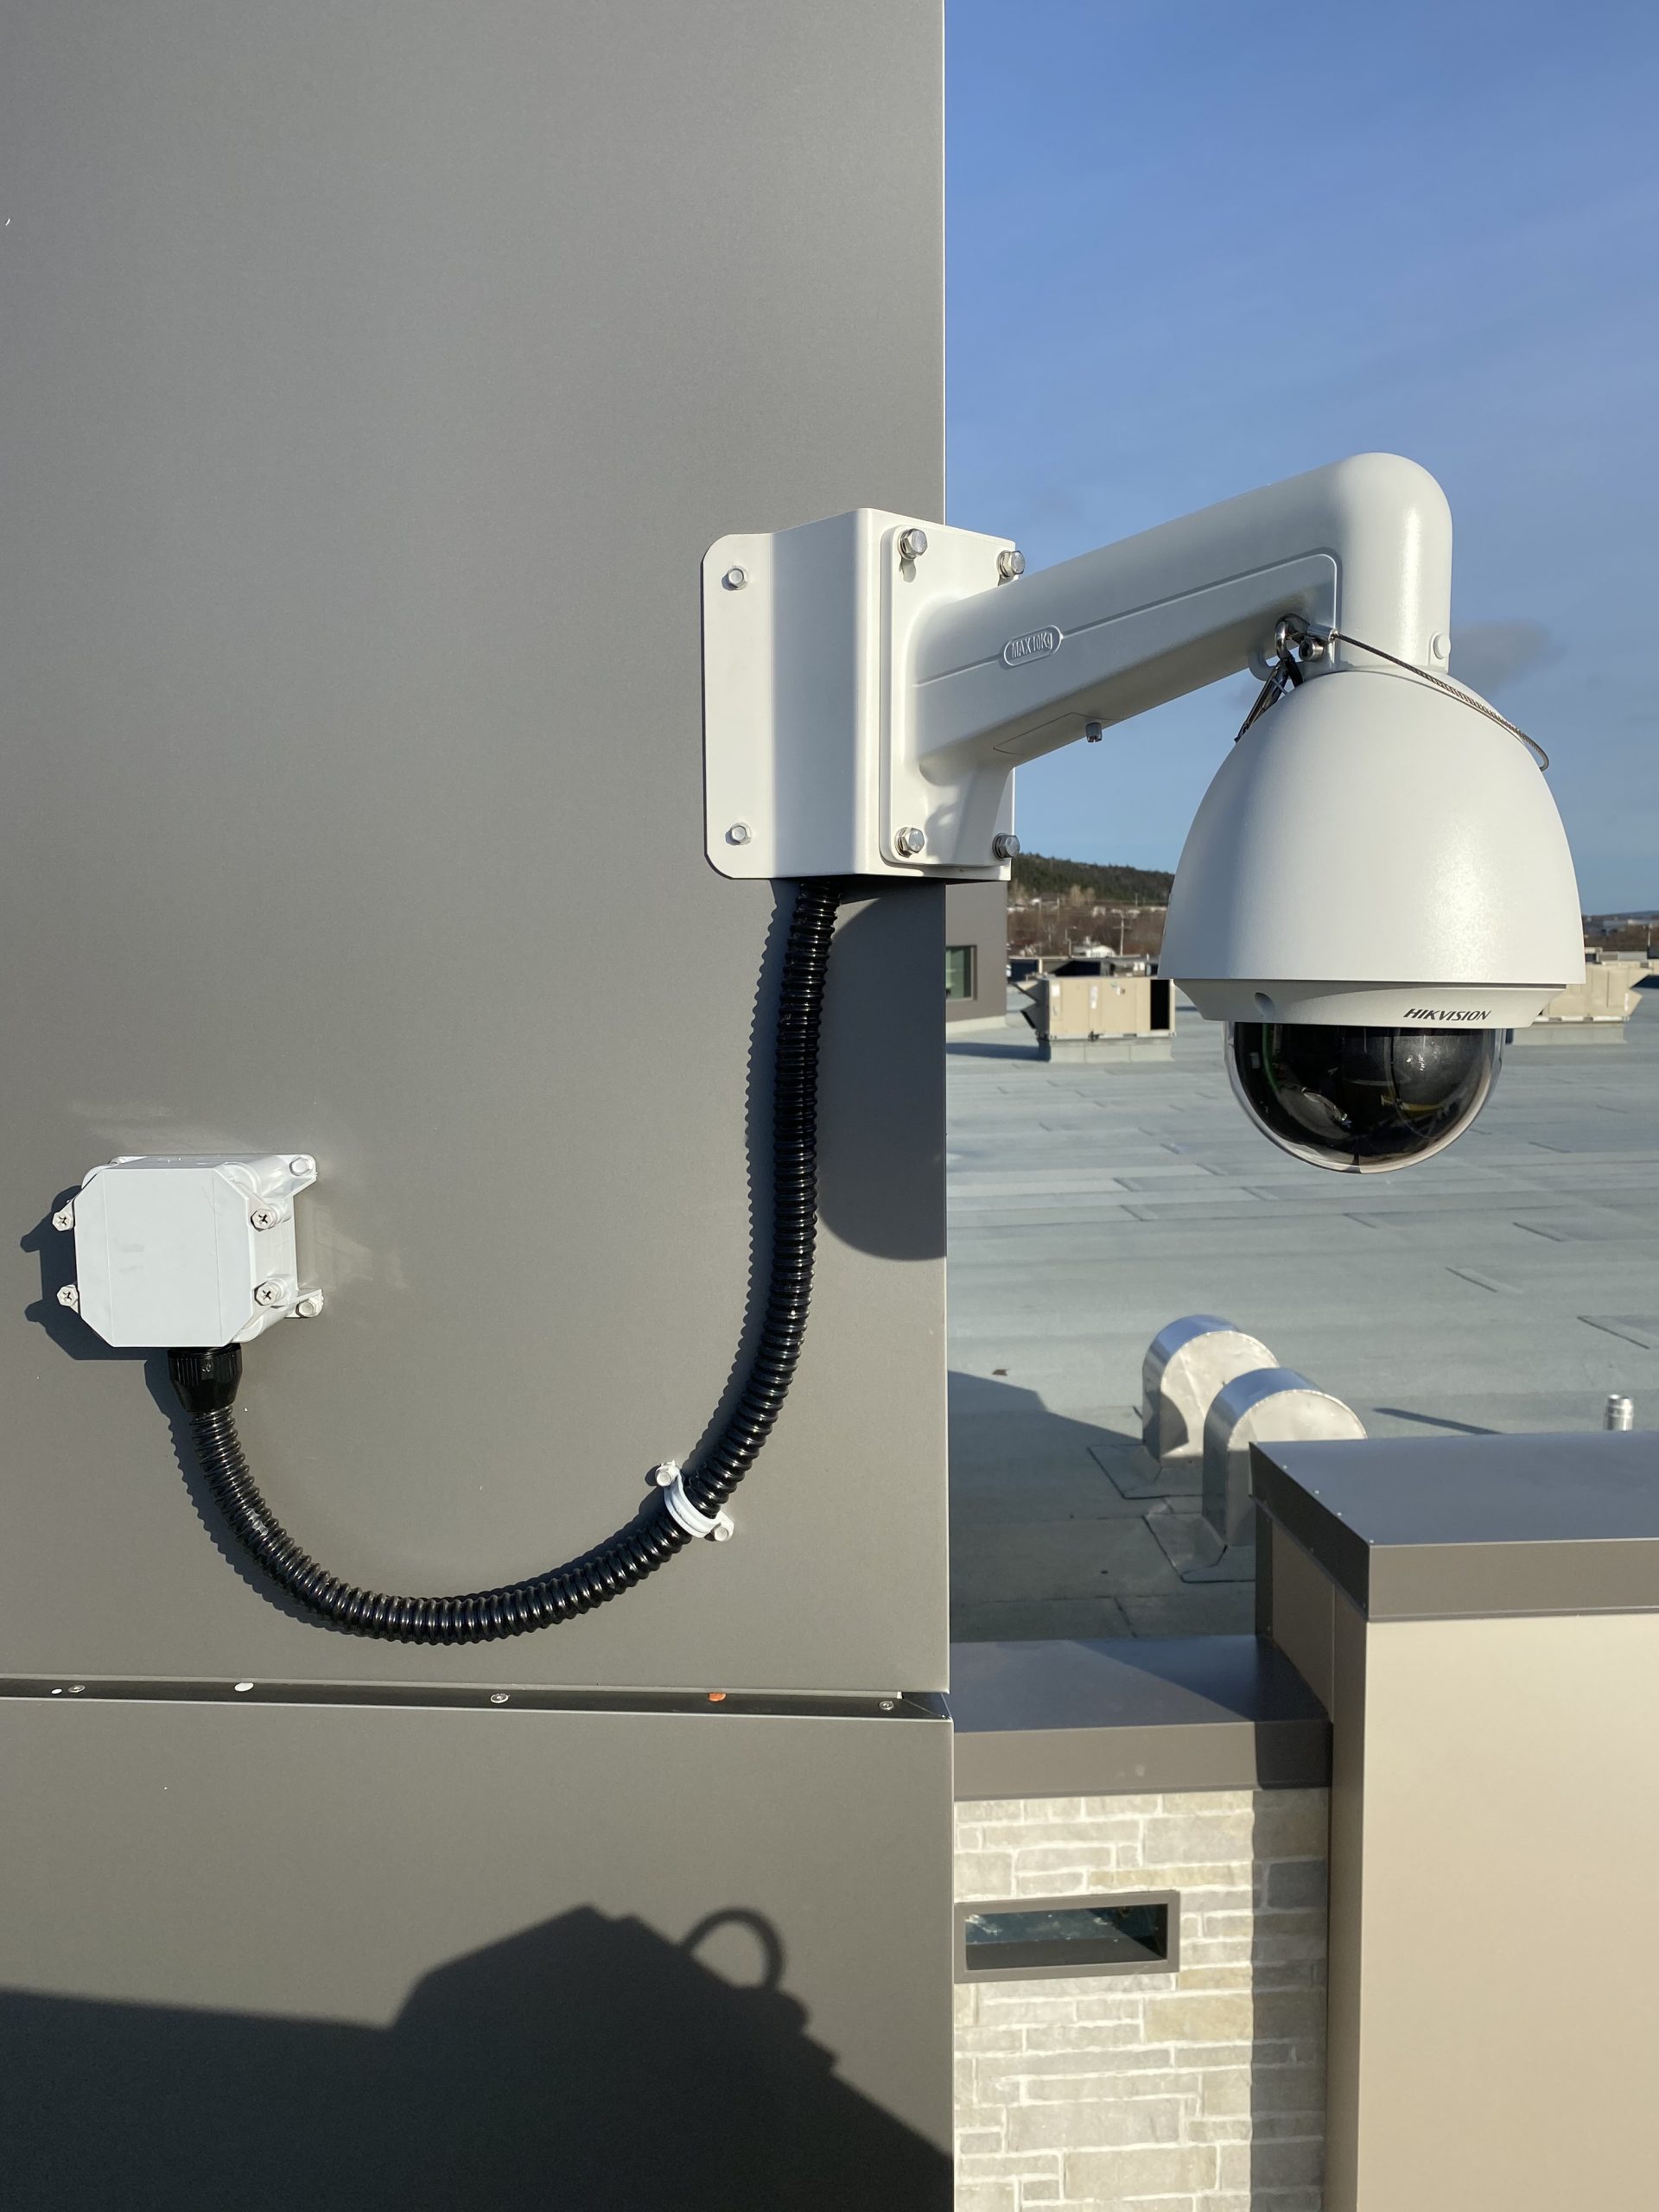 A CCTV camera, newly installed.